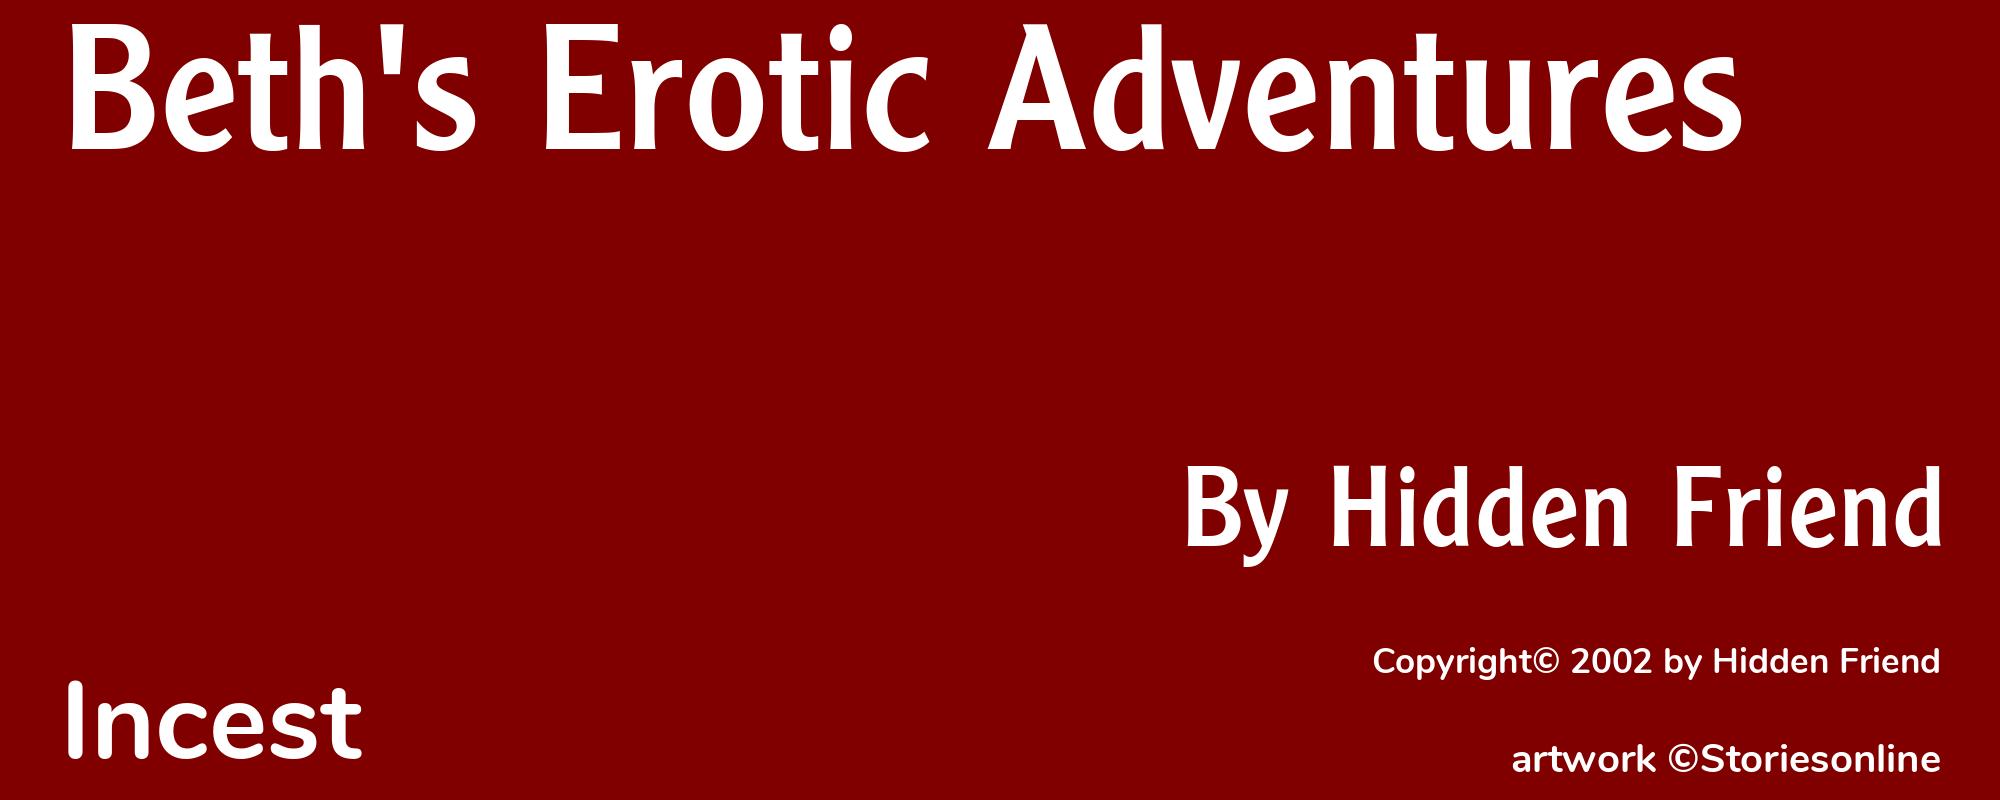 Beth's Erotic Adventures - Cover